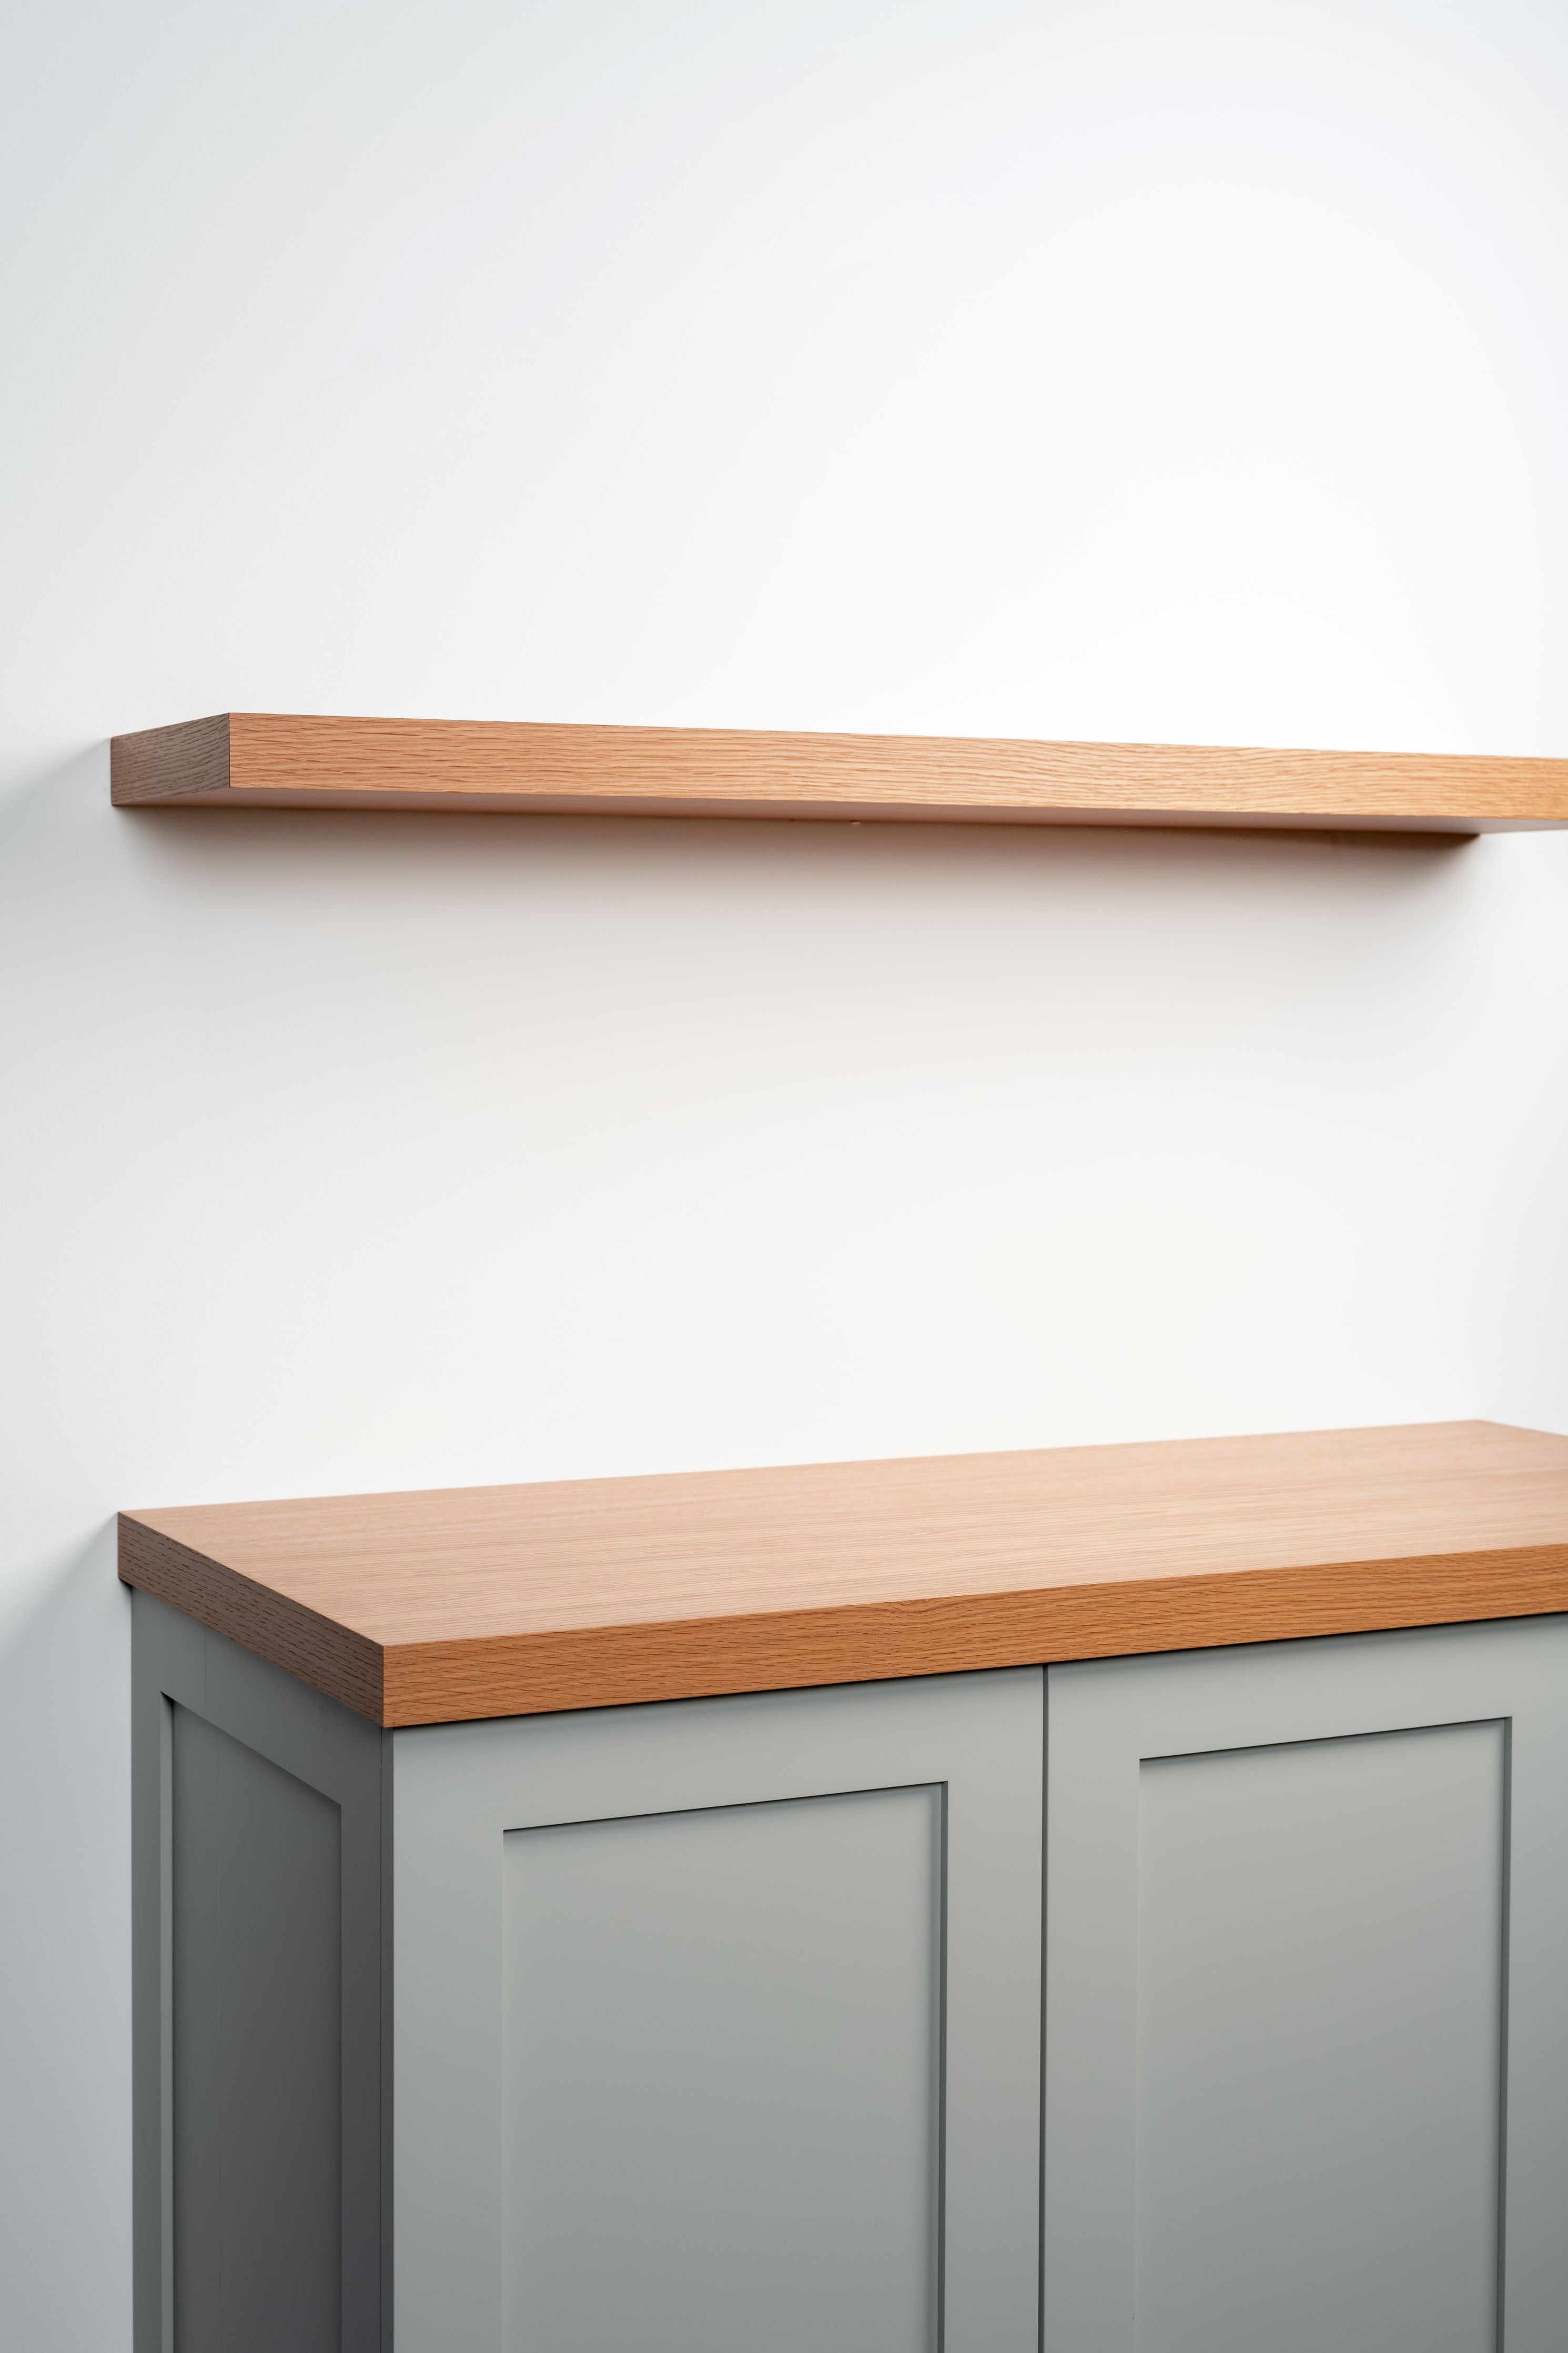 Red Oak 4.1-6" thick Cabinet Top / Slab Shelf